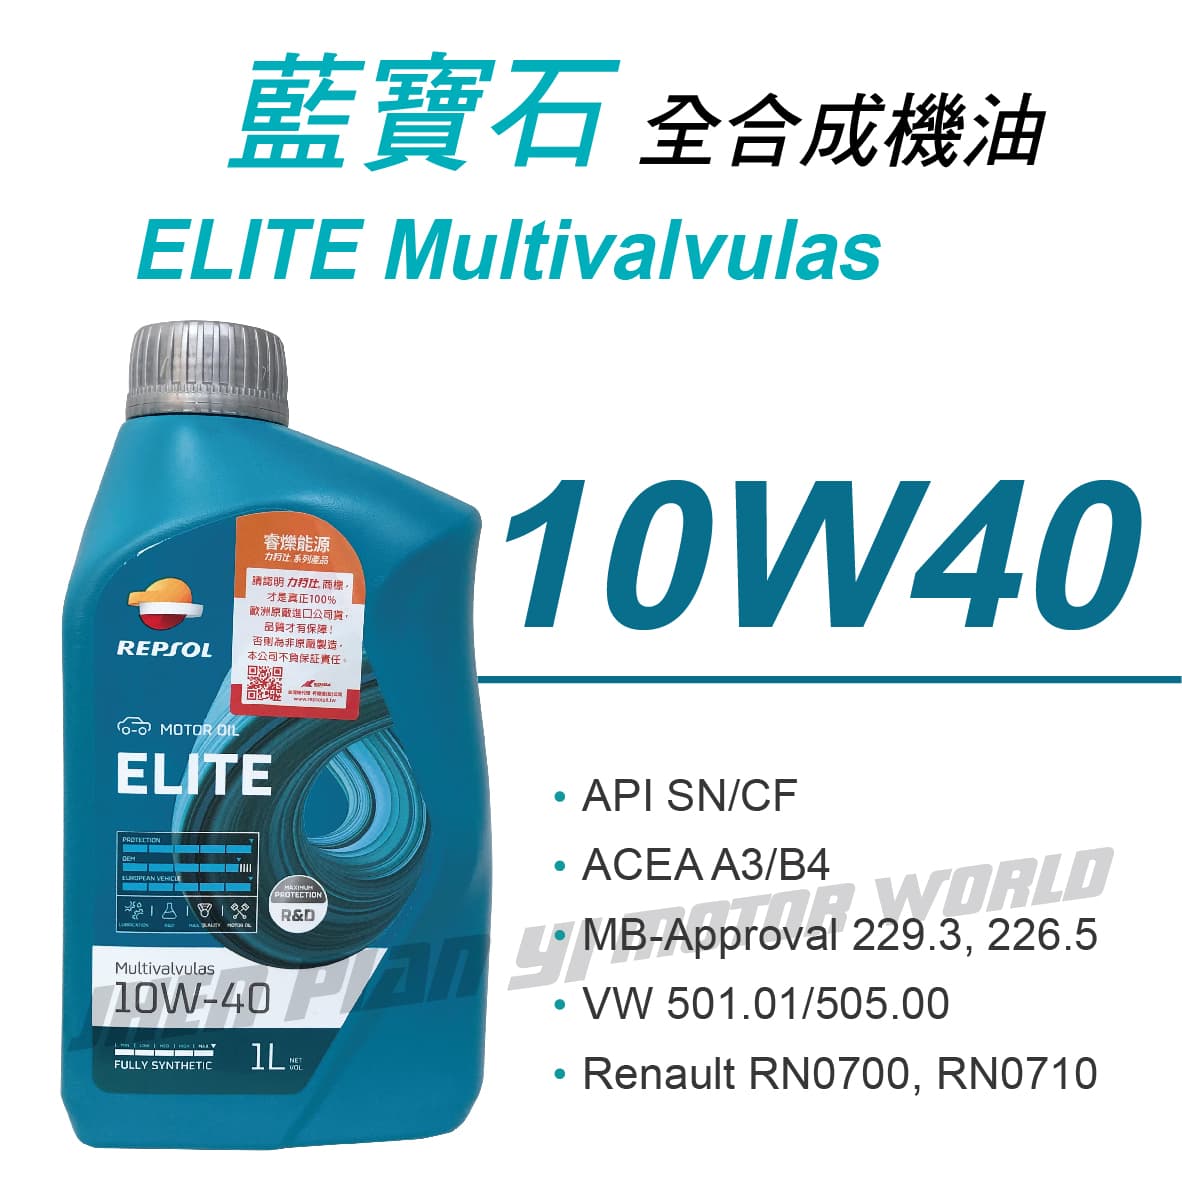 Repsol Multivalvulas 10W40 Elite Fully Synthetic 1L